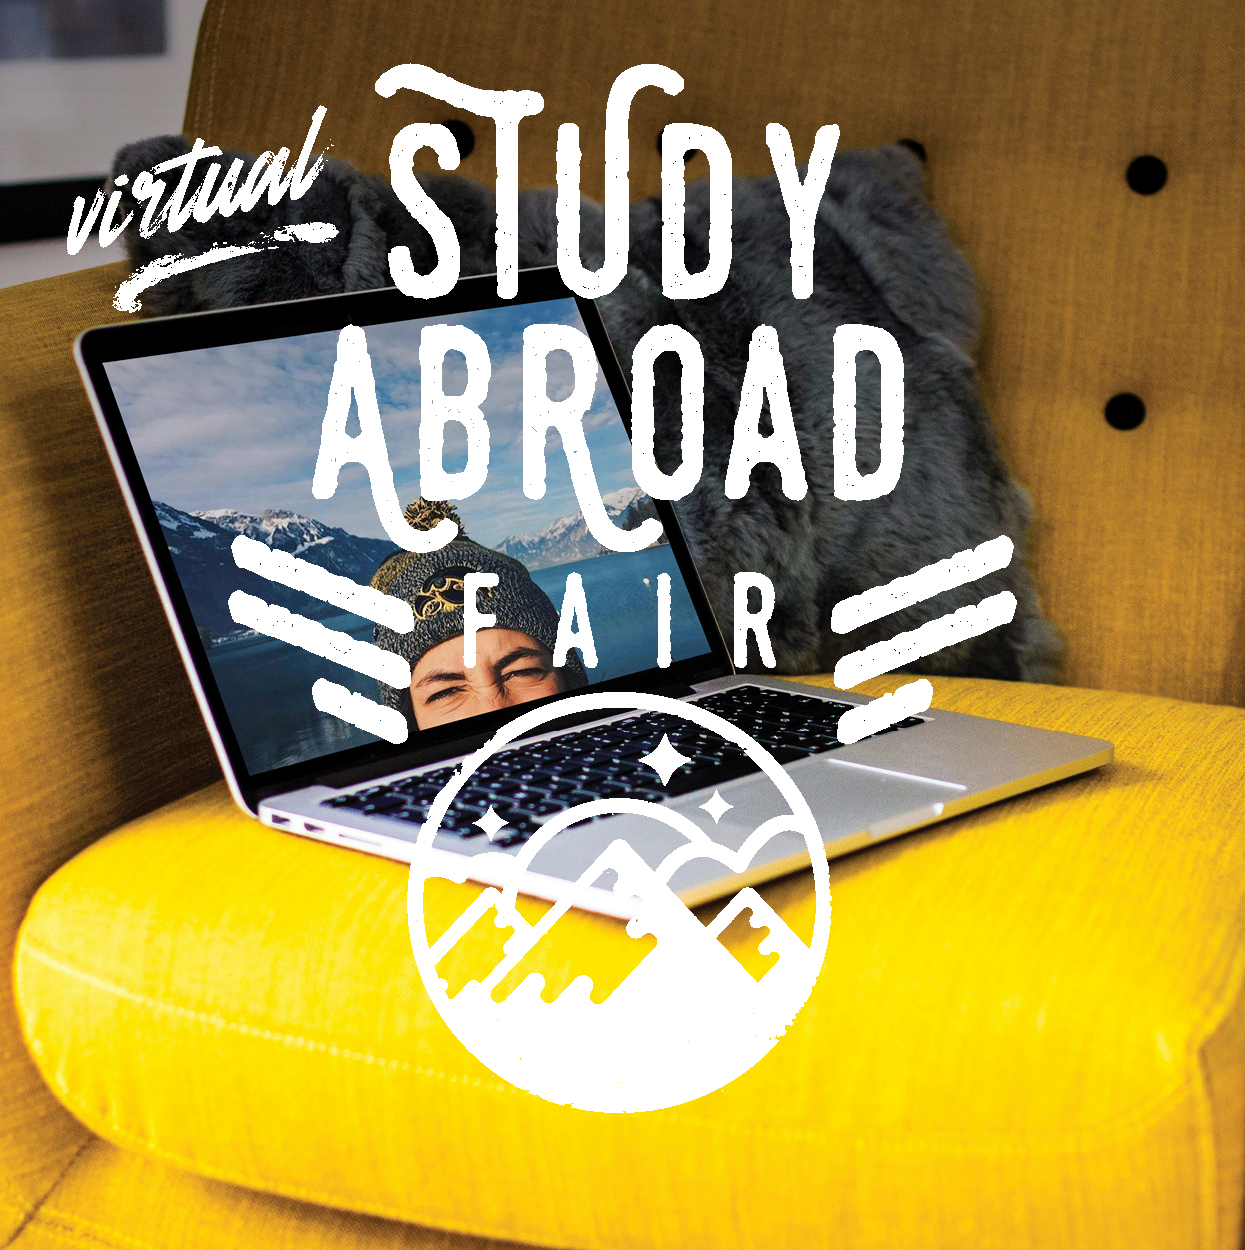 Virtual study abroad fair is September 14 through 17